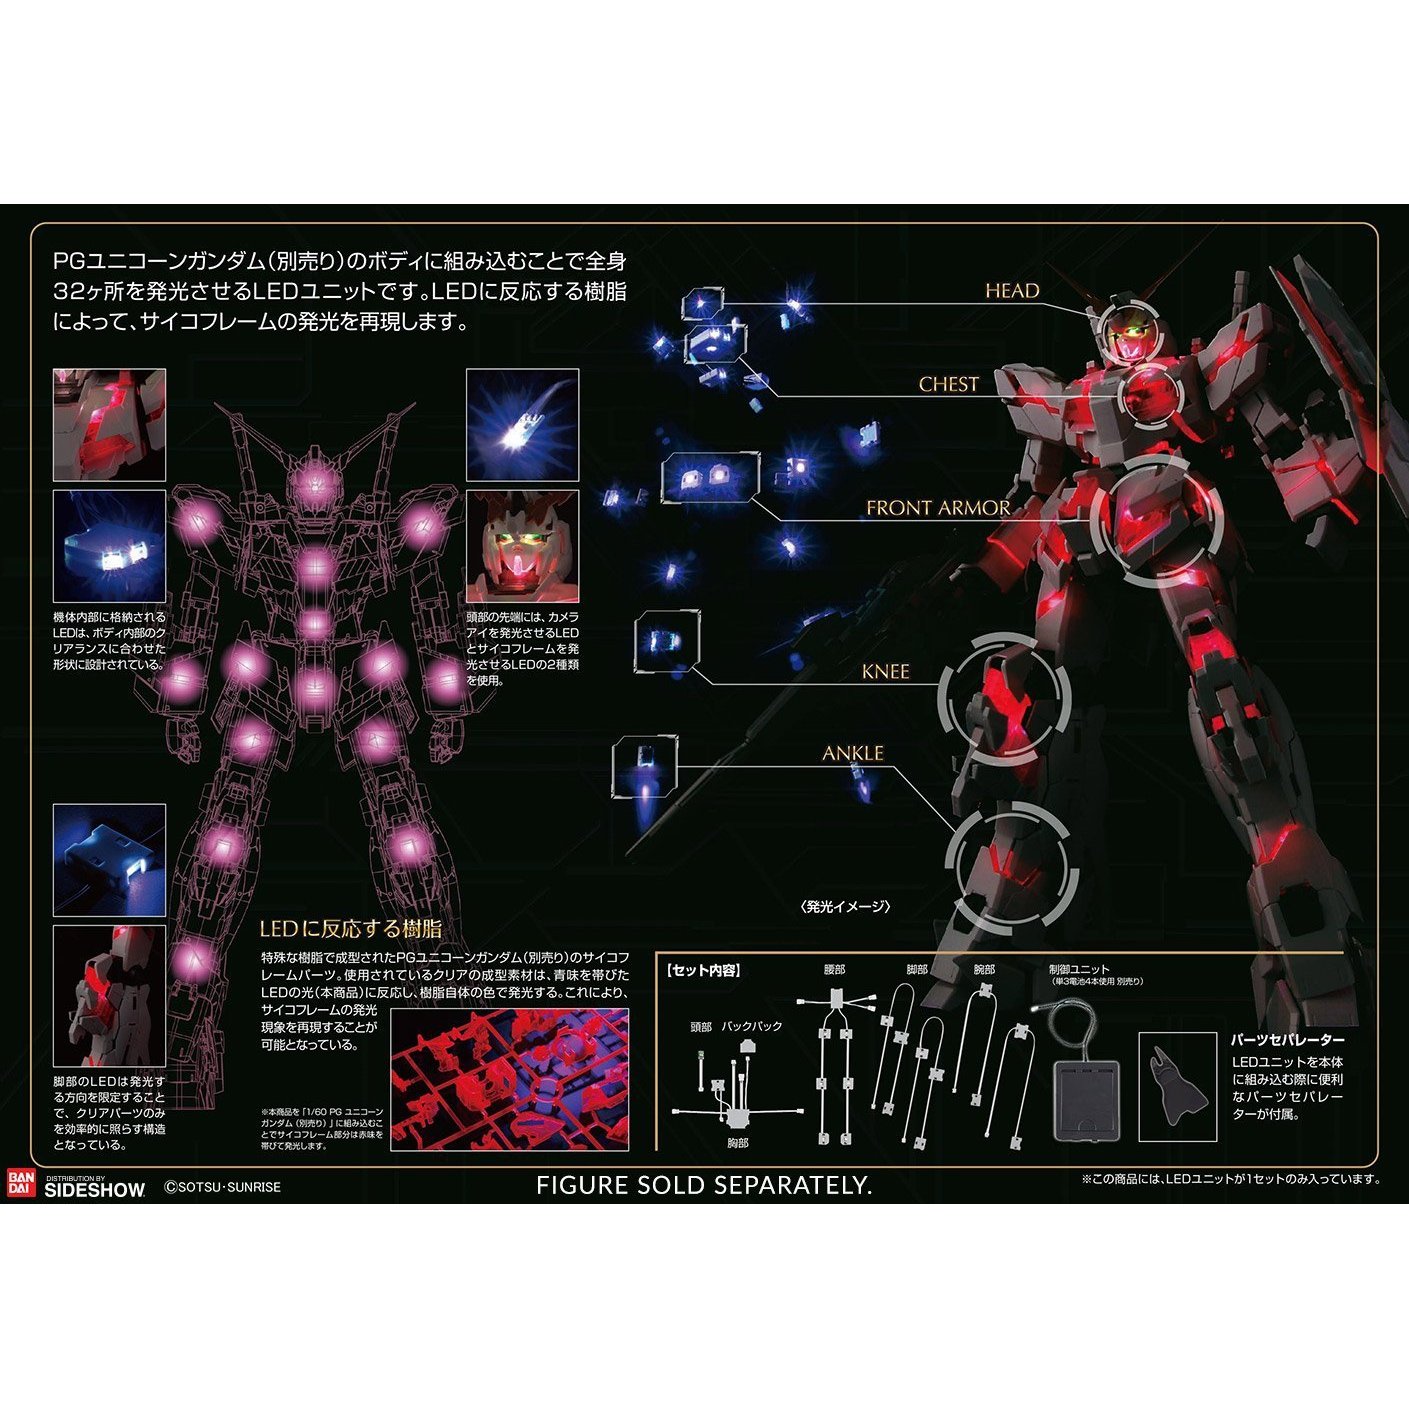 Gunpla LED Unit for PG RX-0 Unicorn Gundam-Bandai-Ace Cards & Collectibles